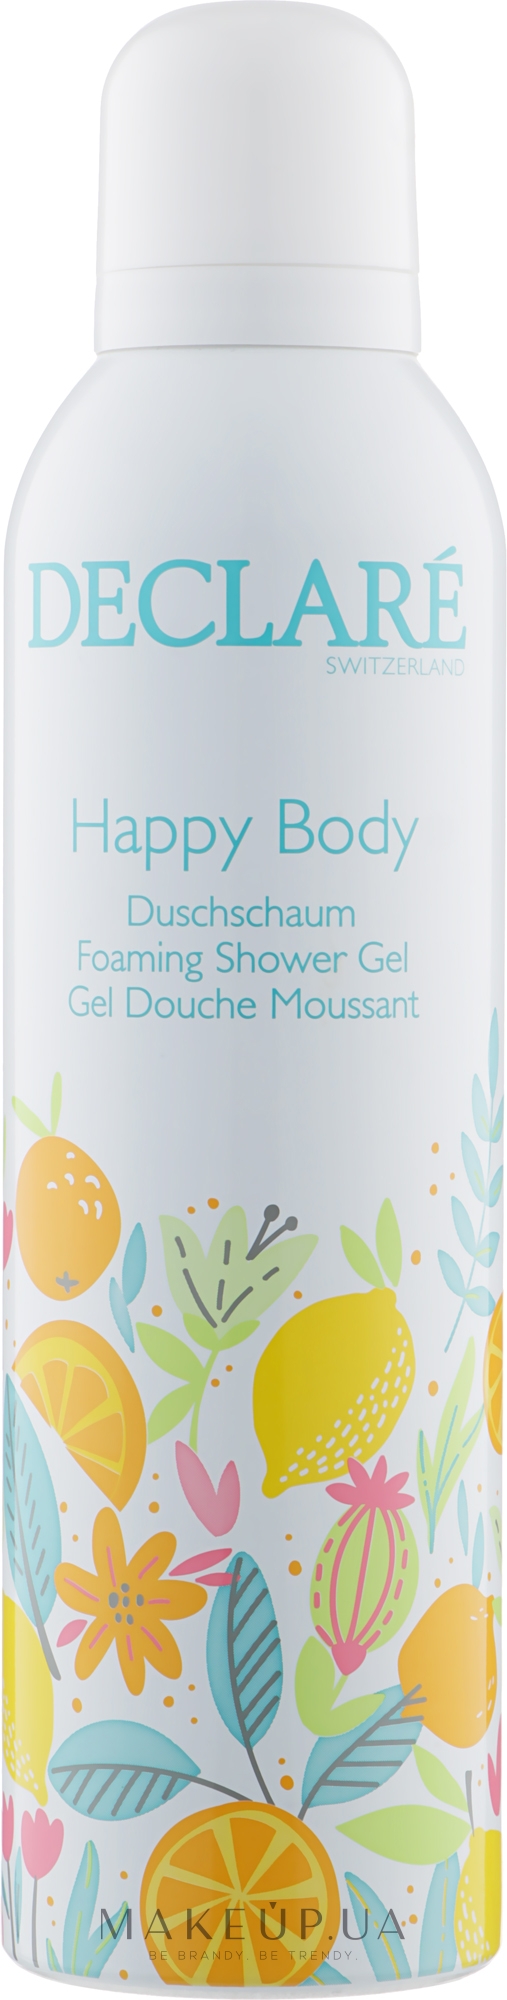 Гель-пена для душа "Счастье для тела" - Declare Foaming Shower Gel Happy Body — фото 200ml